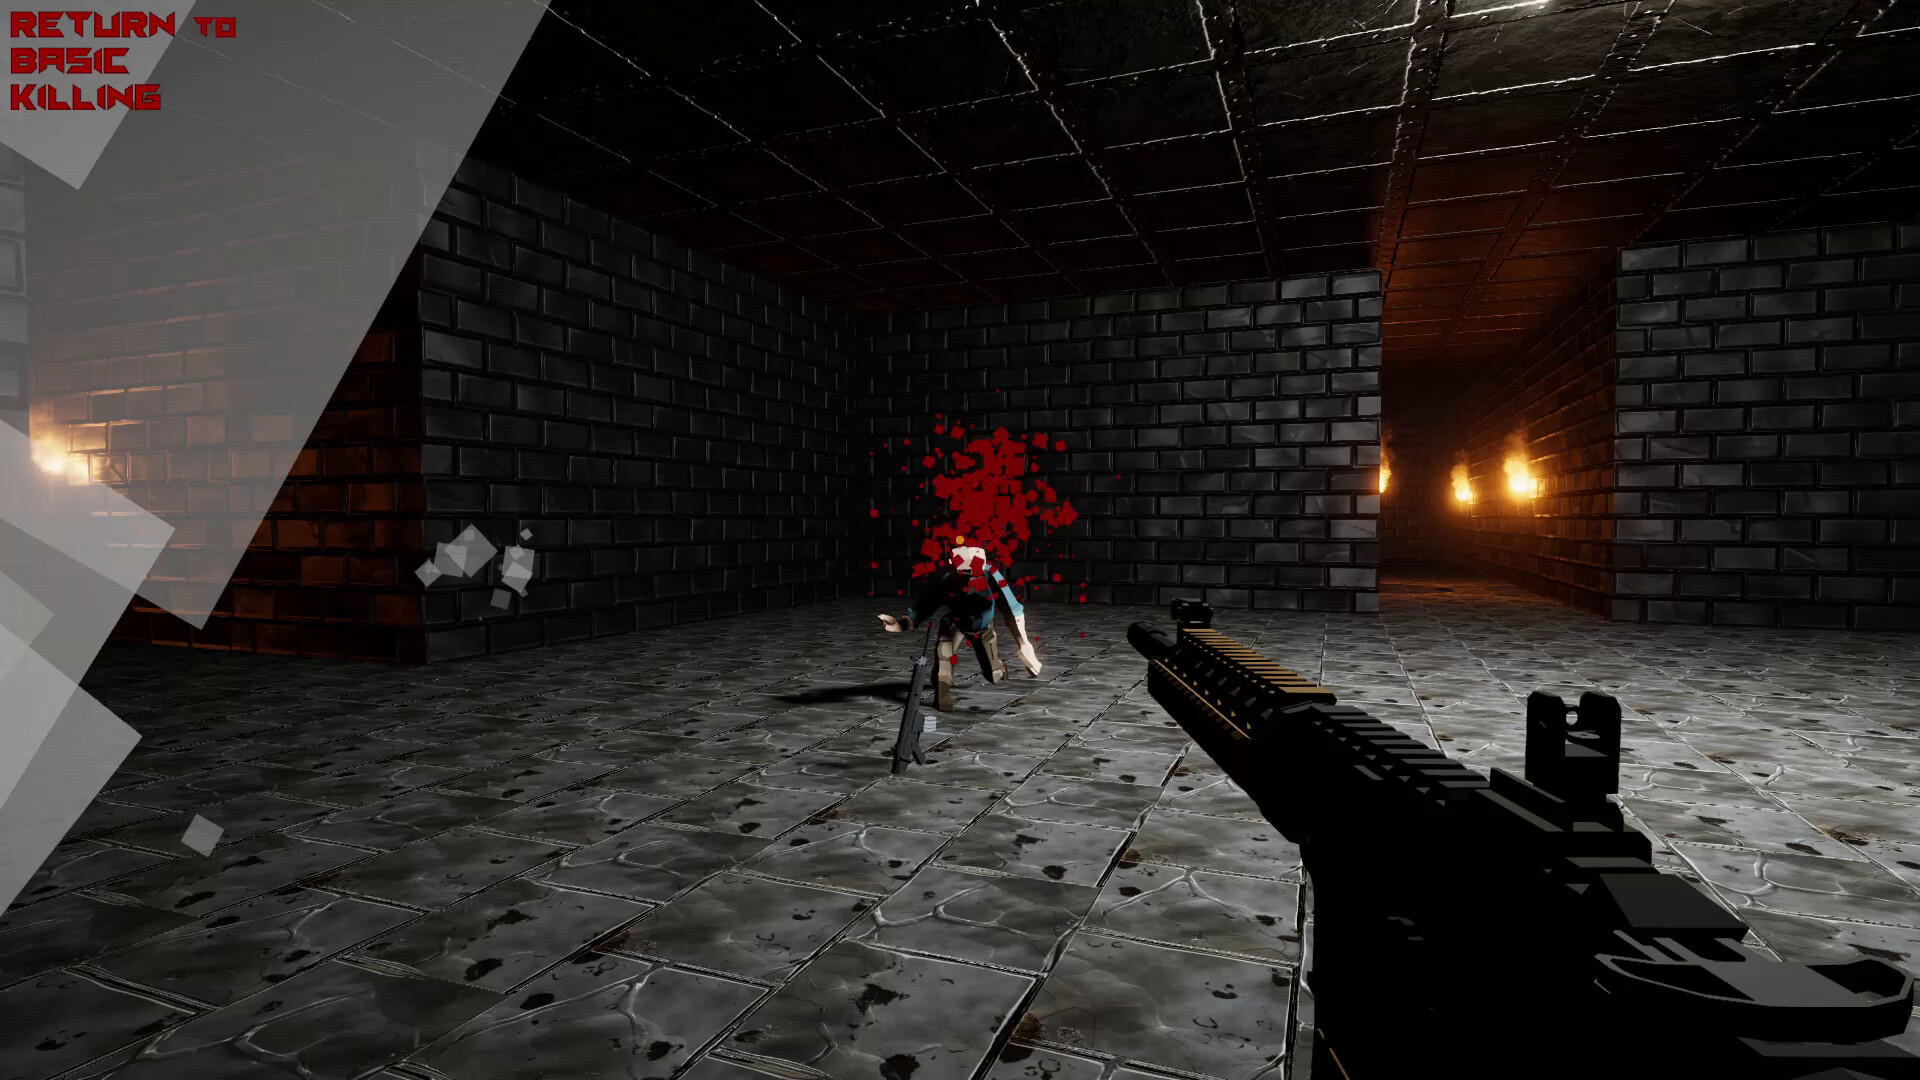 Return to Basic Killing screenshot game